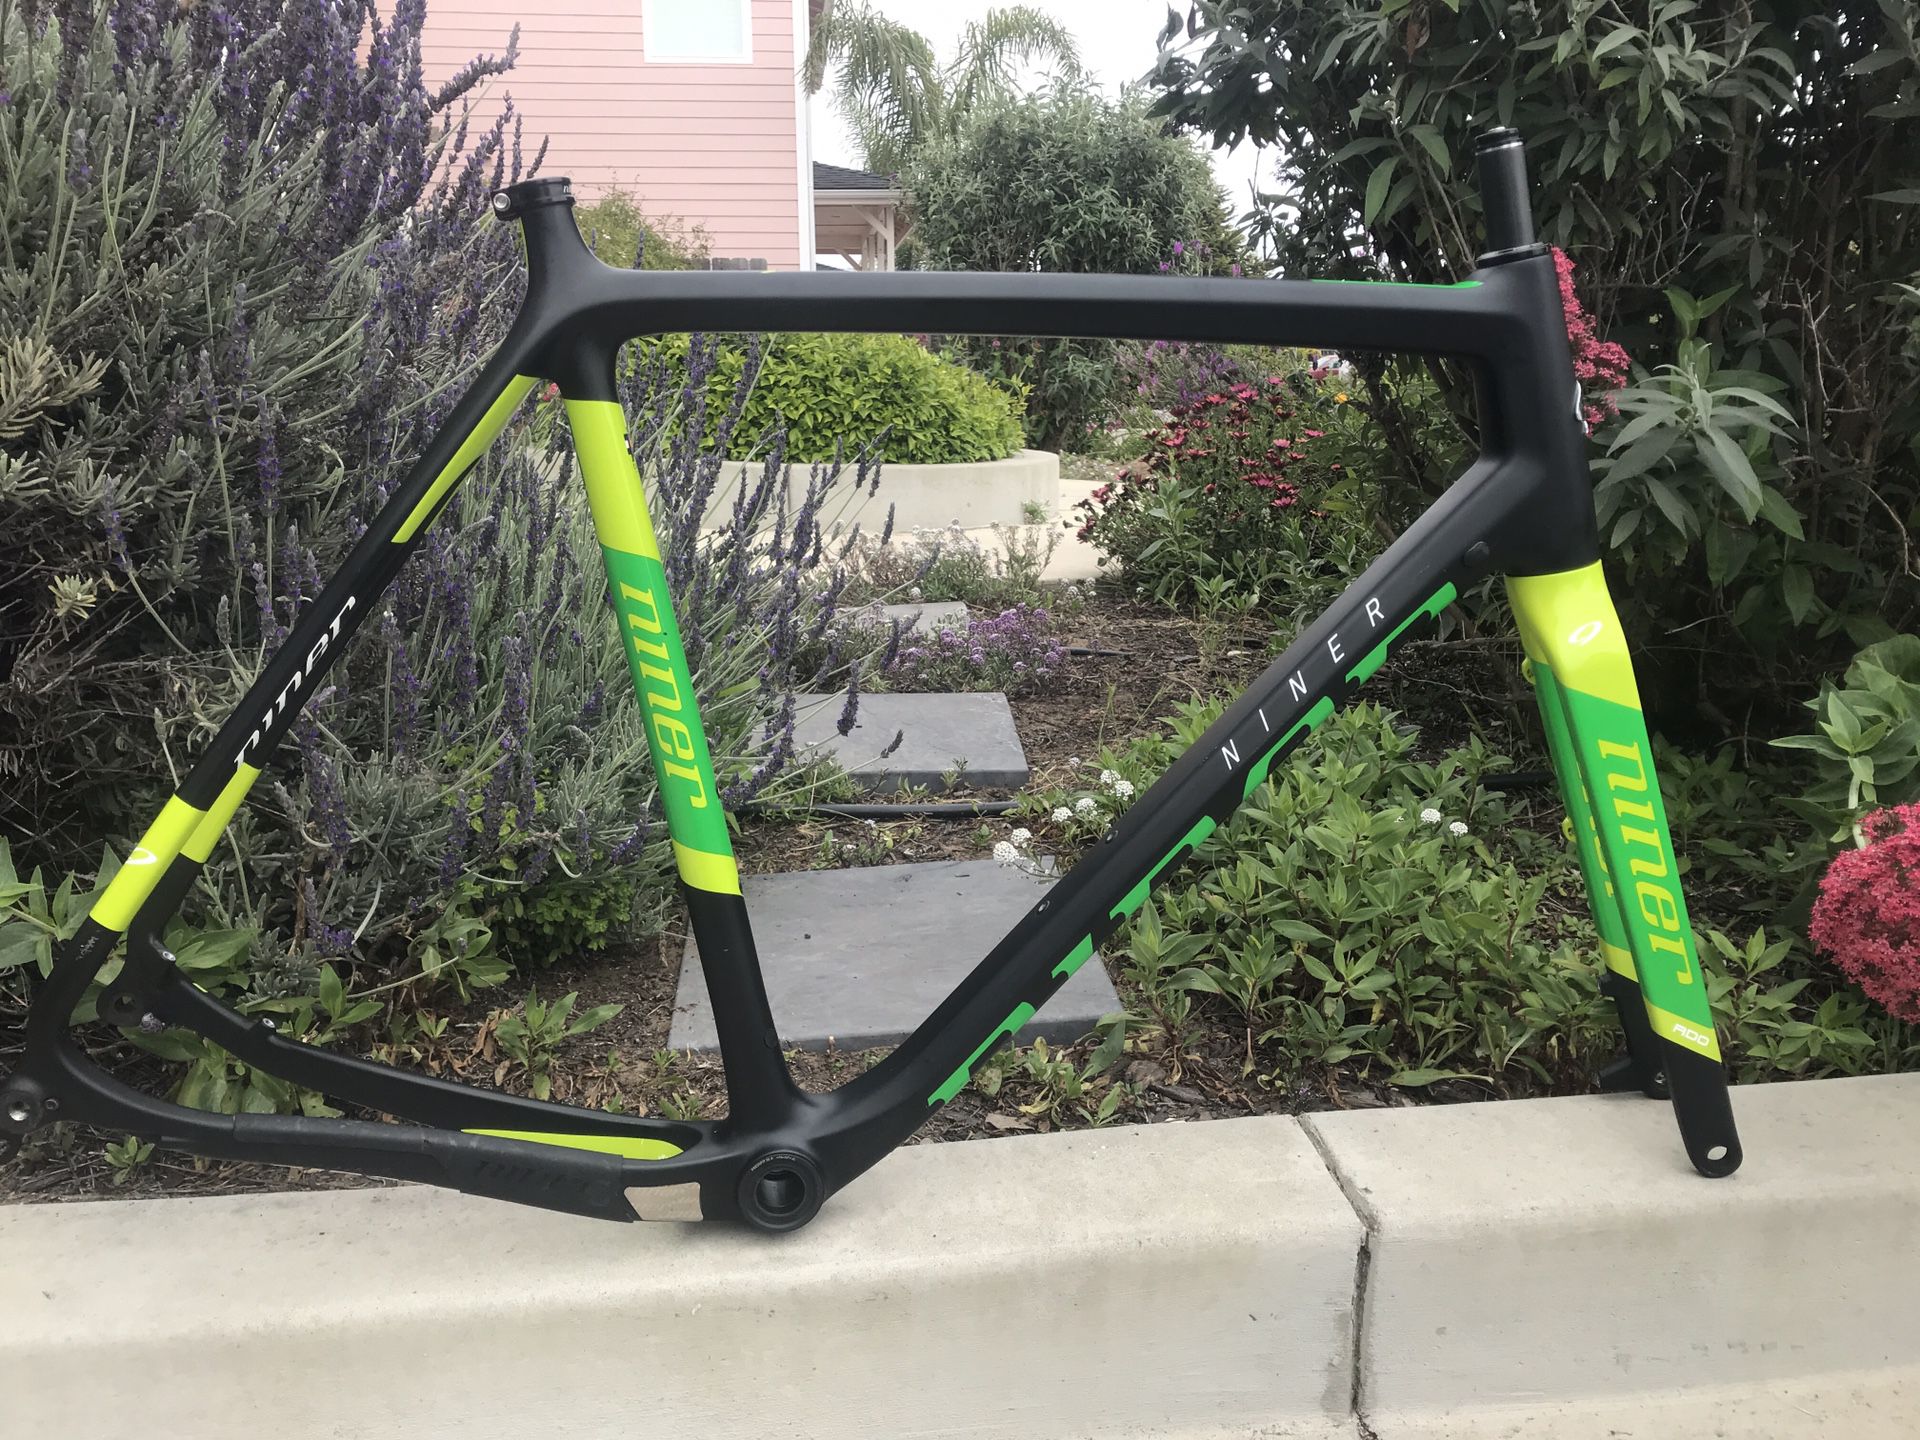 Niner RDO BSB carbon fiber cyclocross frame